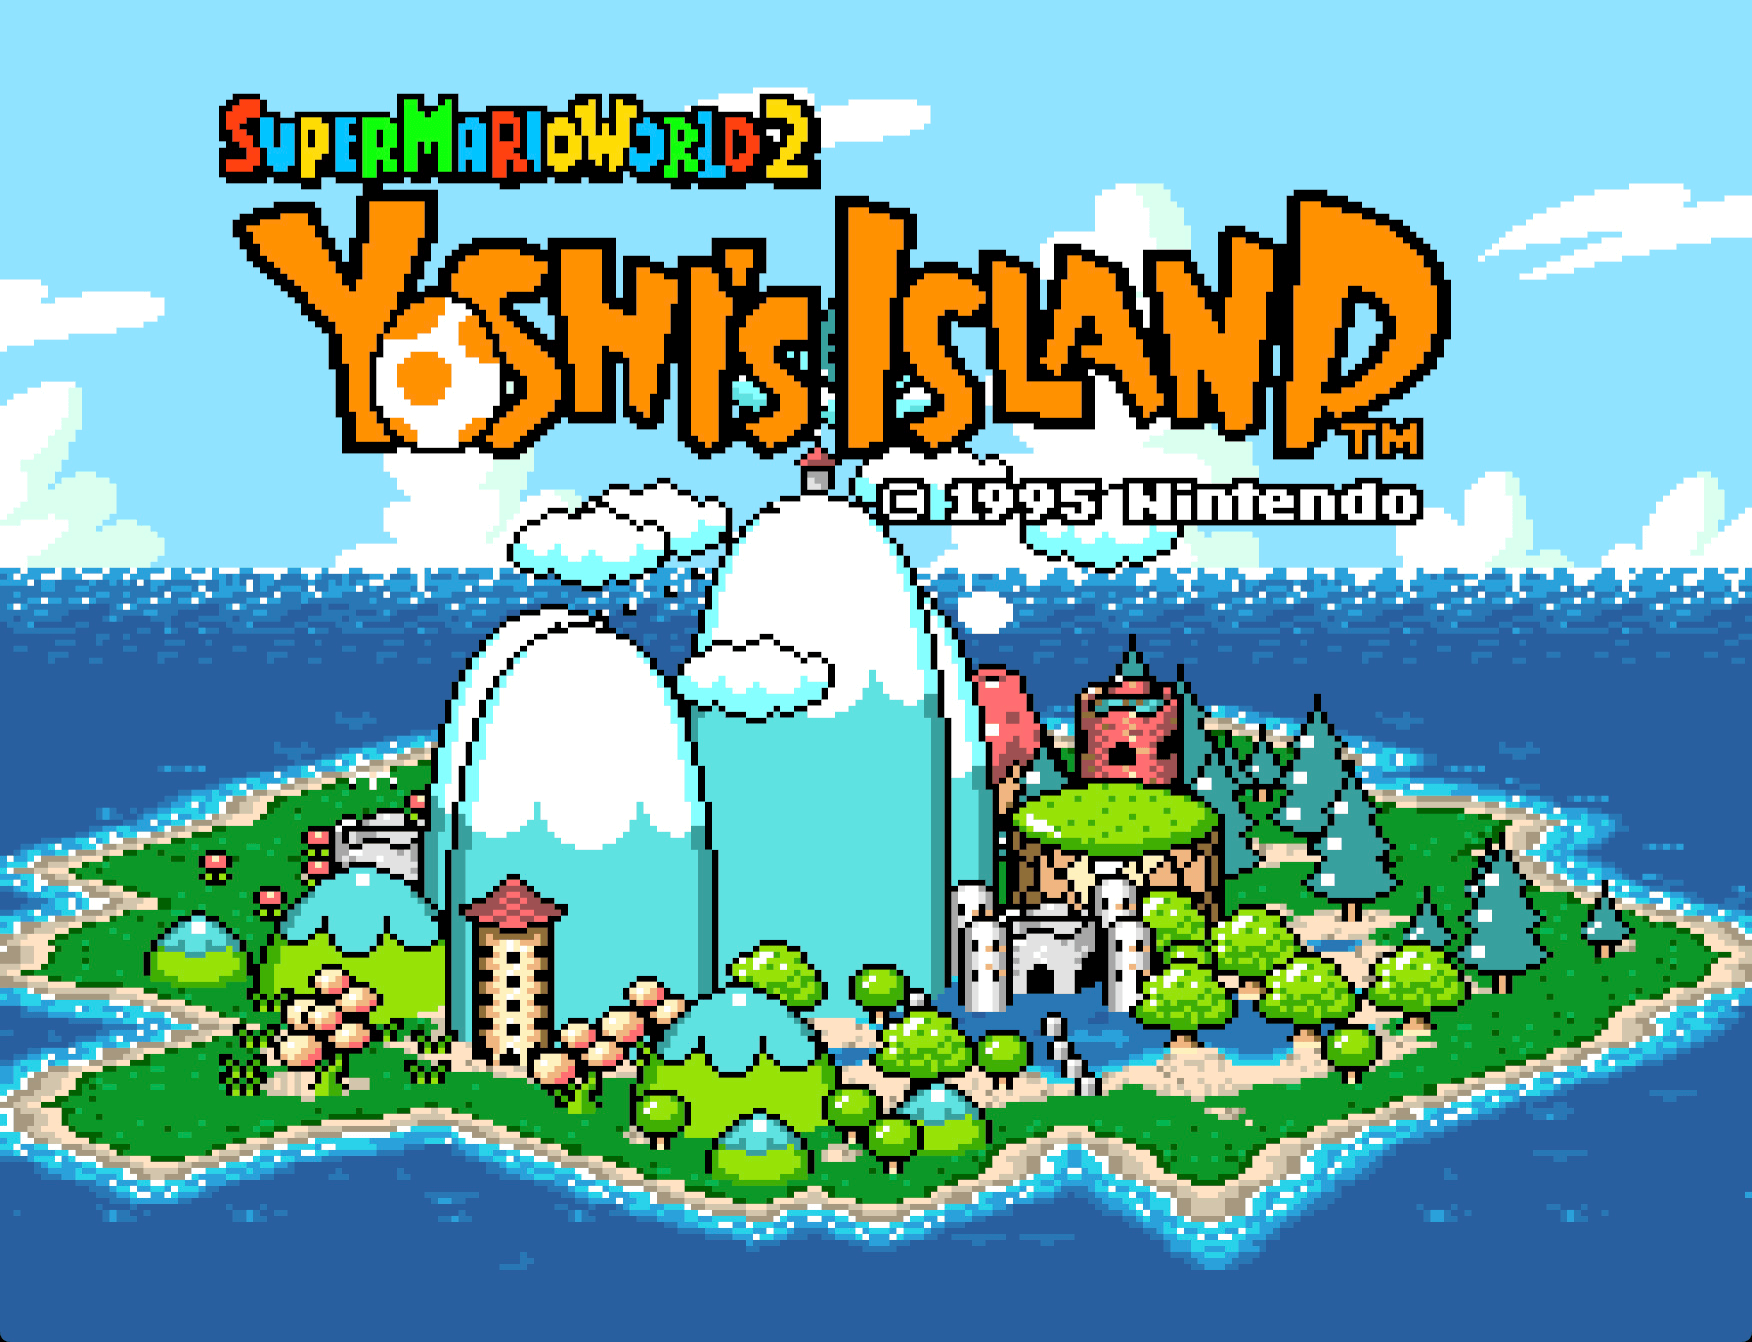 Super mario world. Super Mario World 2 Snes. Yoshi's Island Snes. Super Mario World 2 Yoshi's Island Snes. Super Mario World обложка.